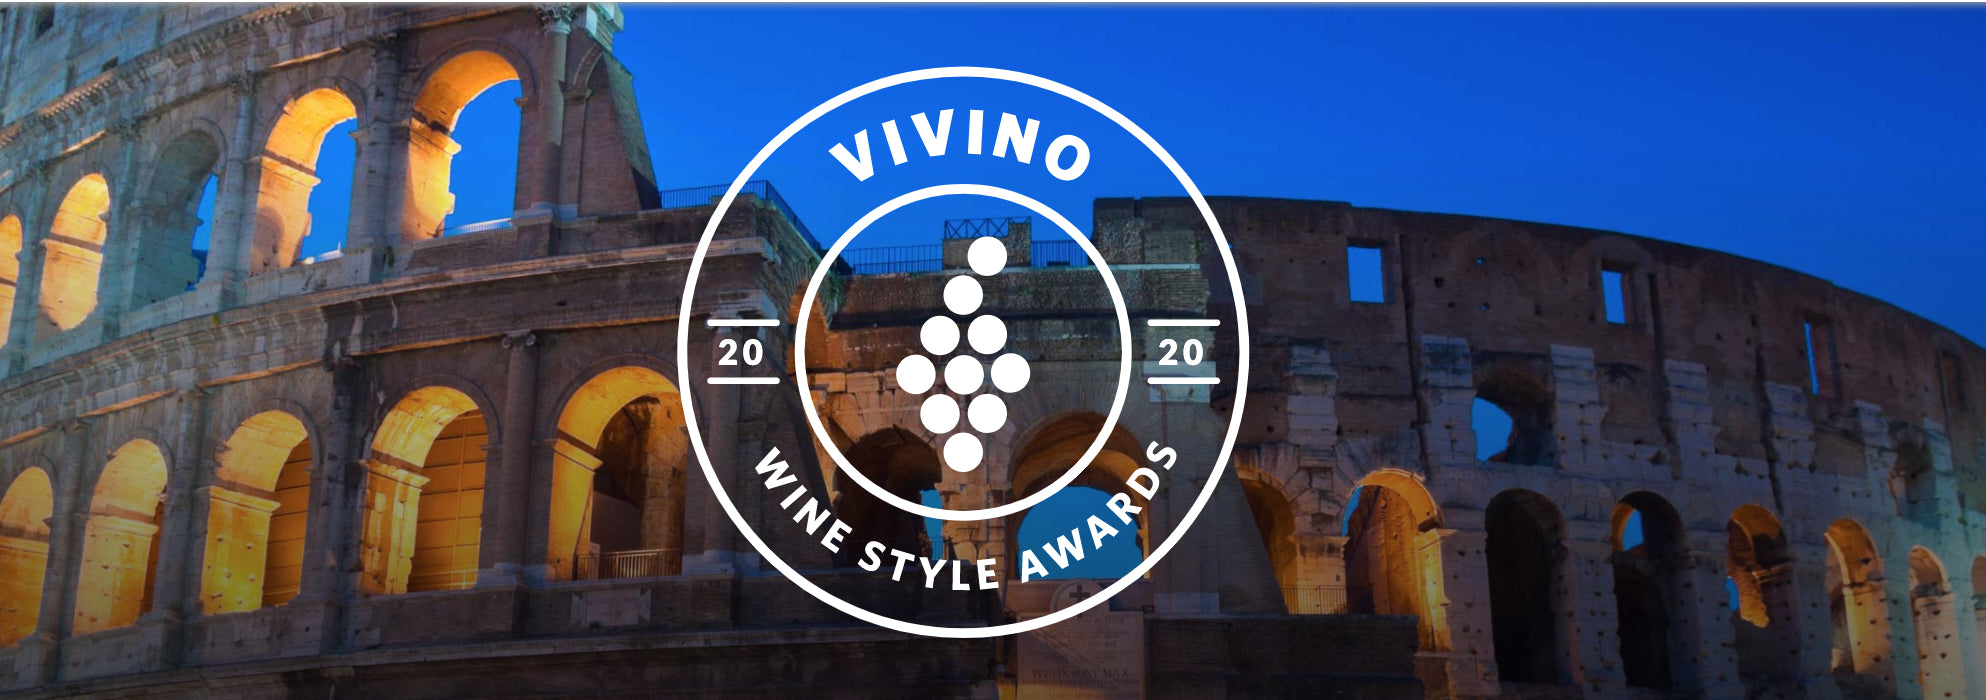 Vivino Wine Style Awards 2020 - SYLTBAR Ranks Top 2